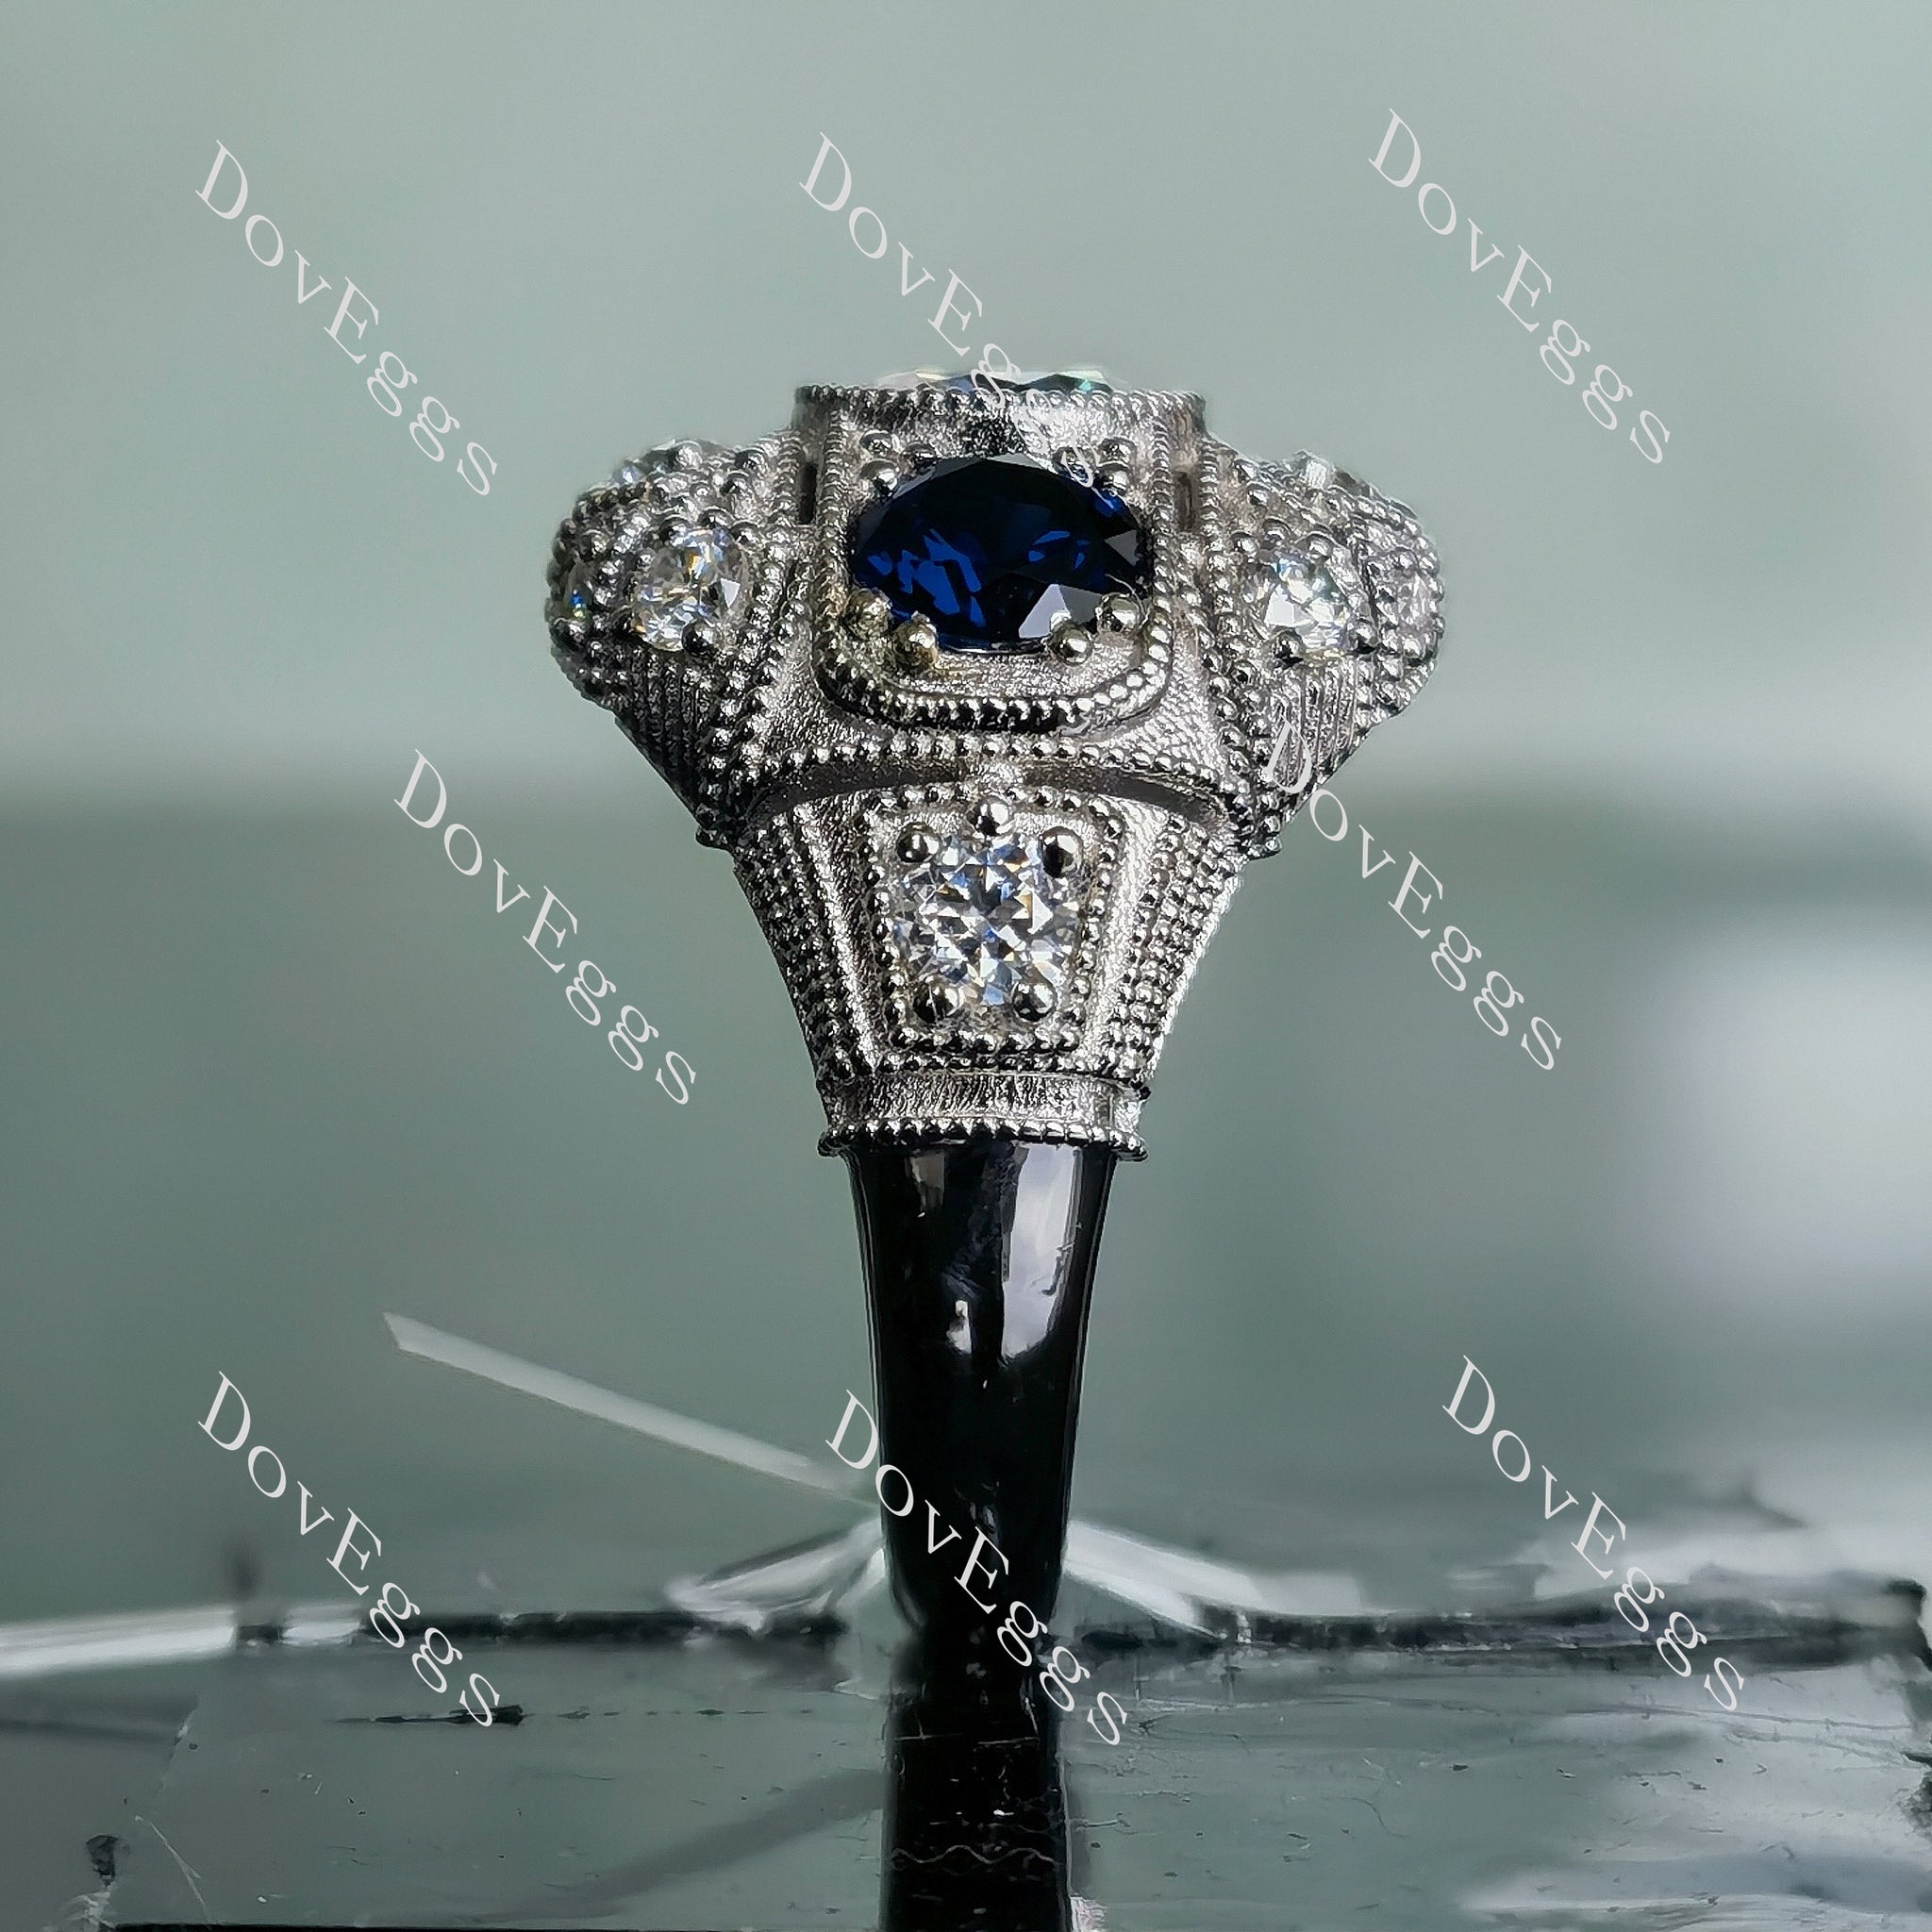 Doveggs round bezel three-stone moissanite/colored gem engagement ring